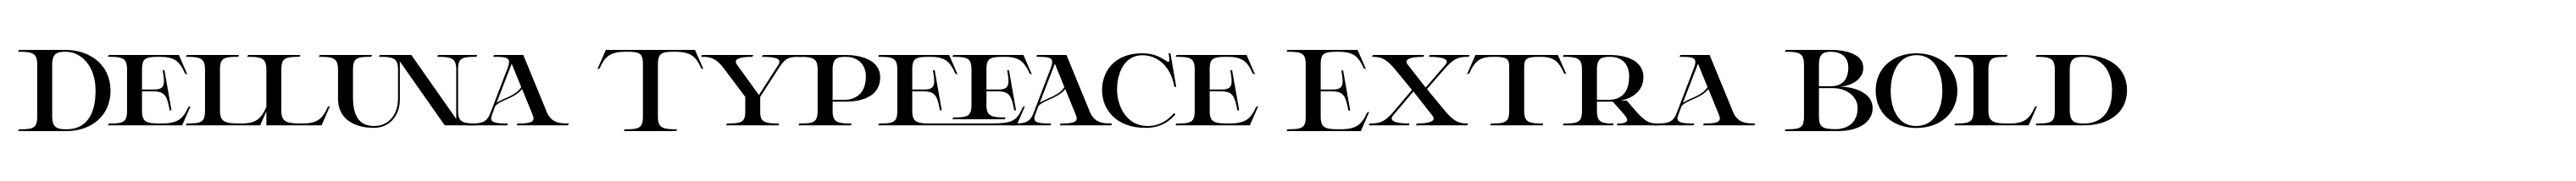 Delluna Typeface Extra Bold